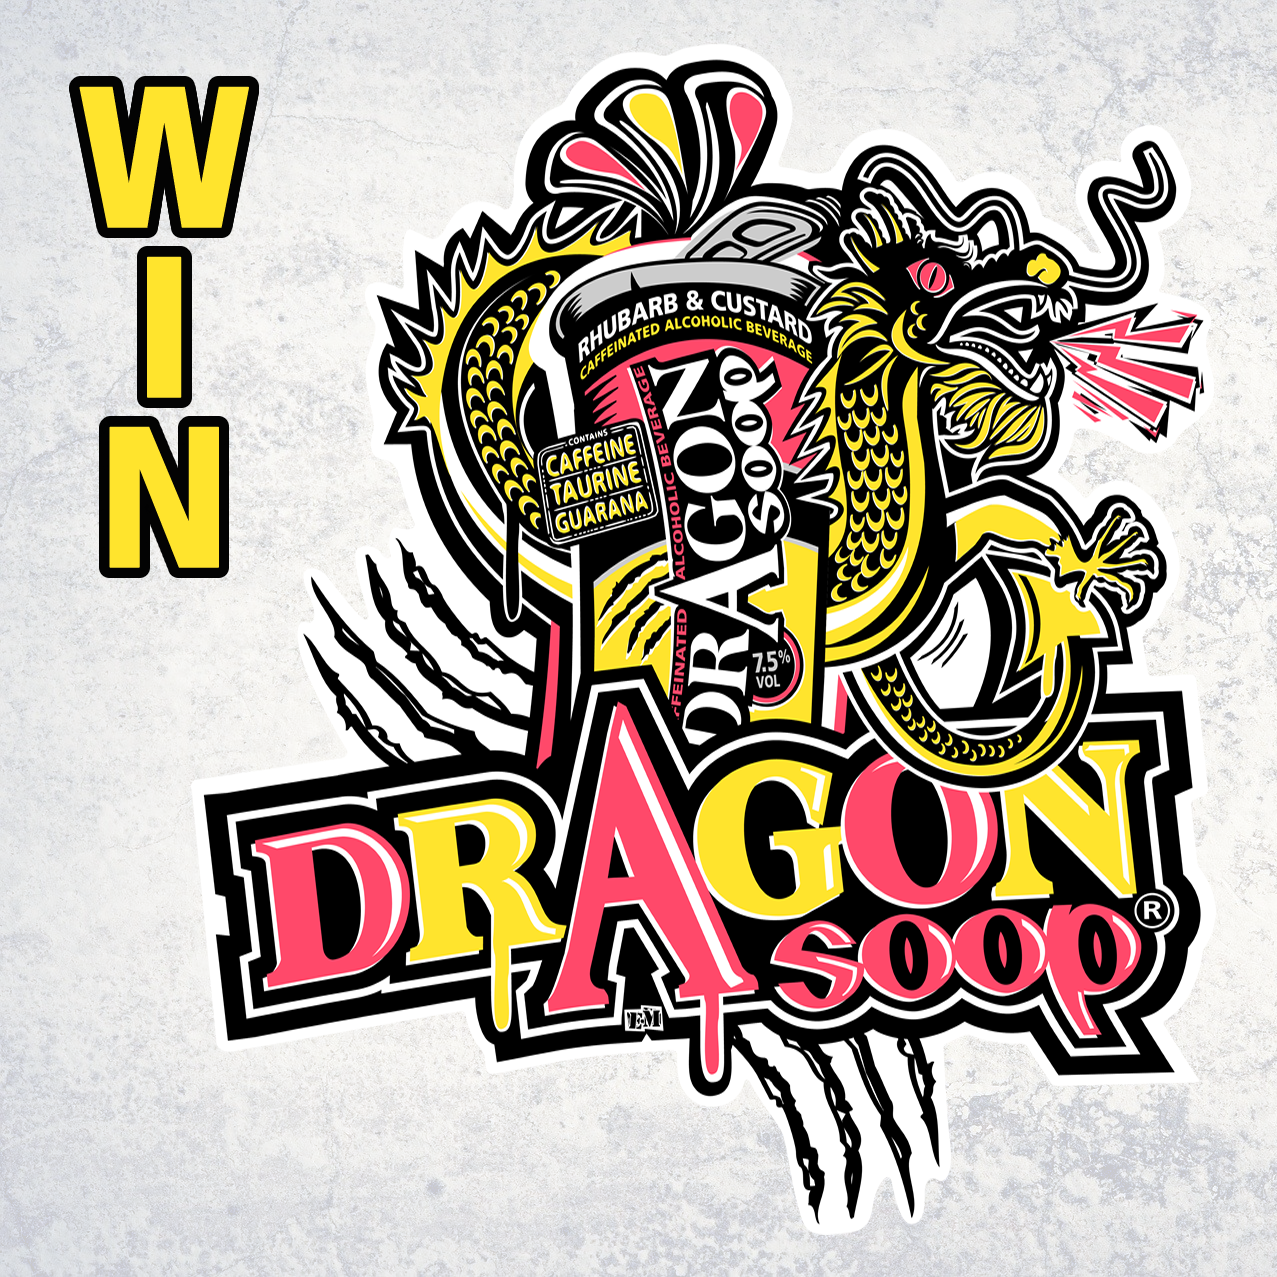 win-dragonsoop-rhubard-custard.png